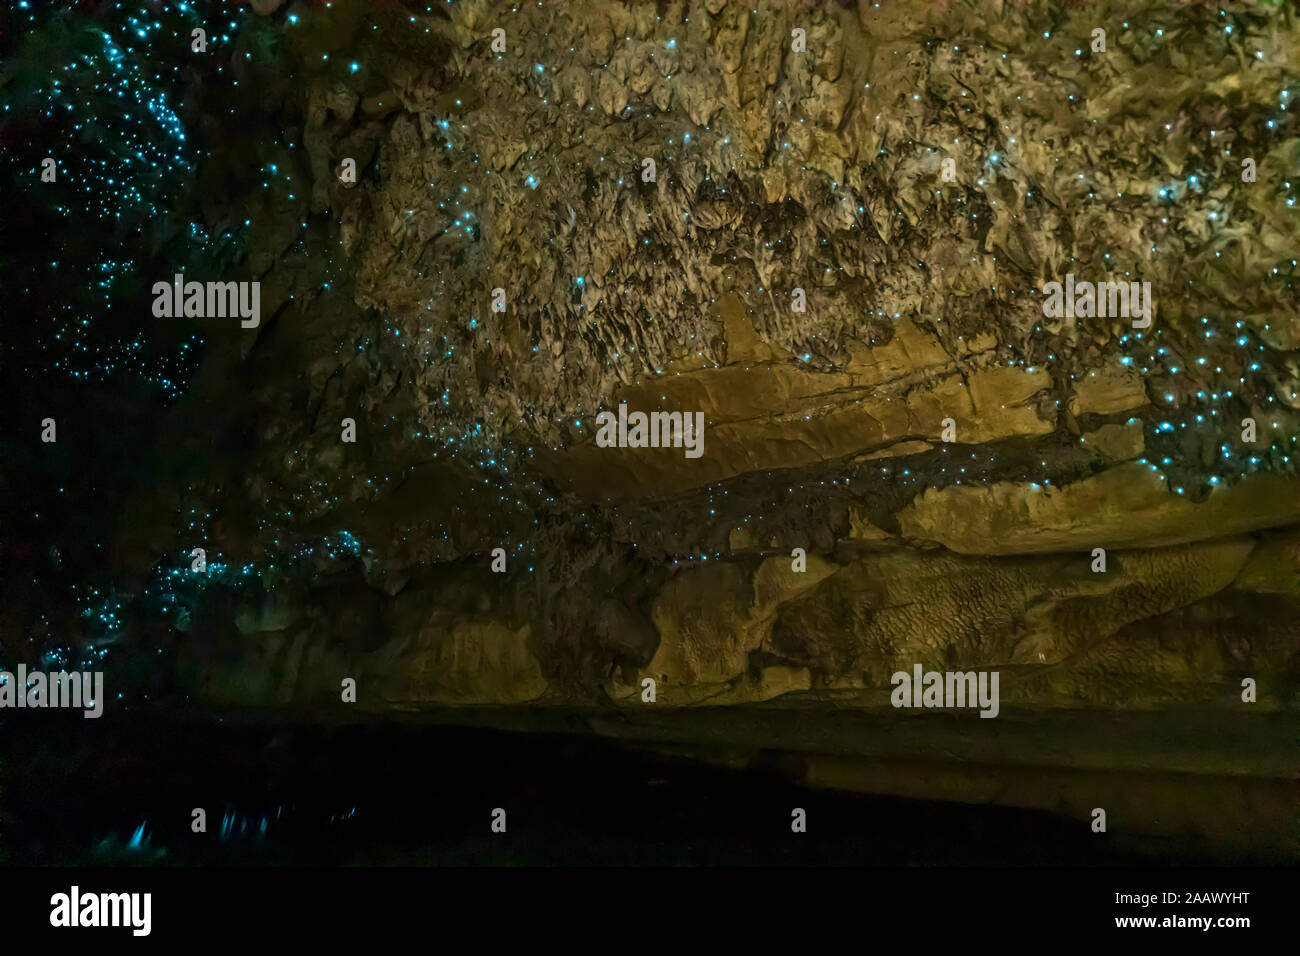 Low angle view of illuminated Arachnocampa luminosa de Waipu grotte, Océanie, Nouvelle Zélande Banque D'Images